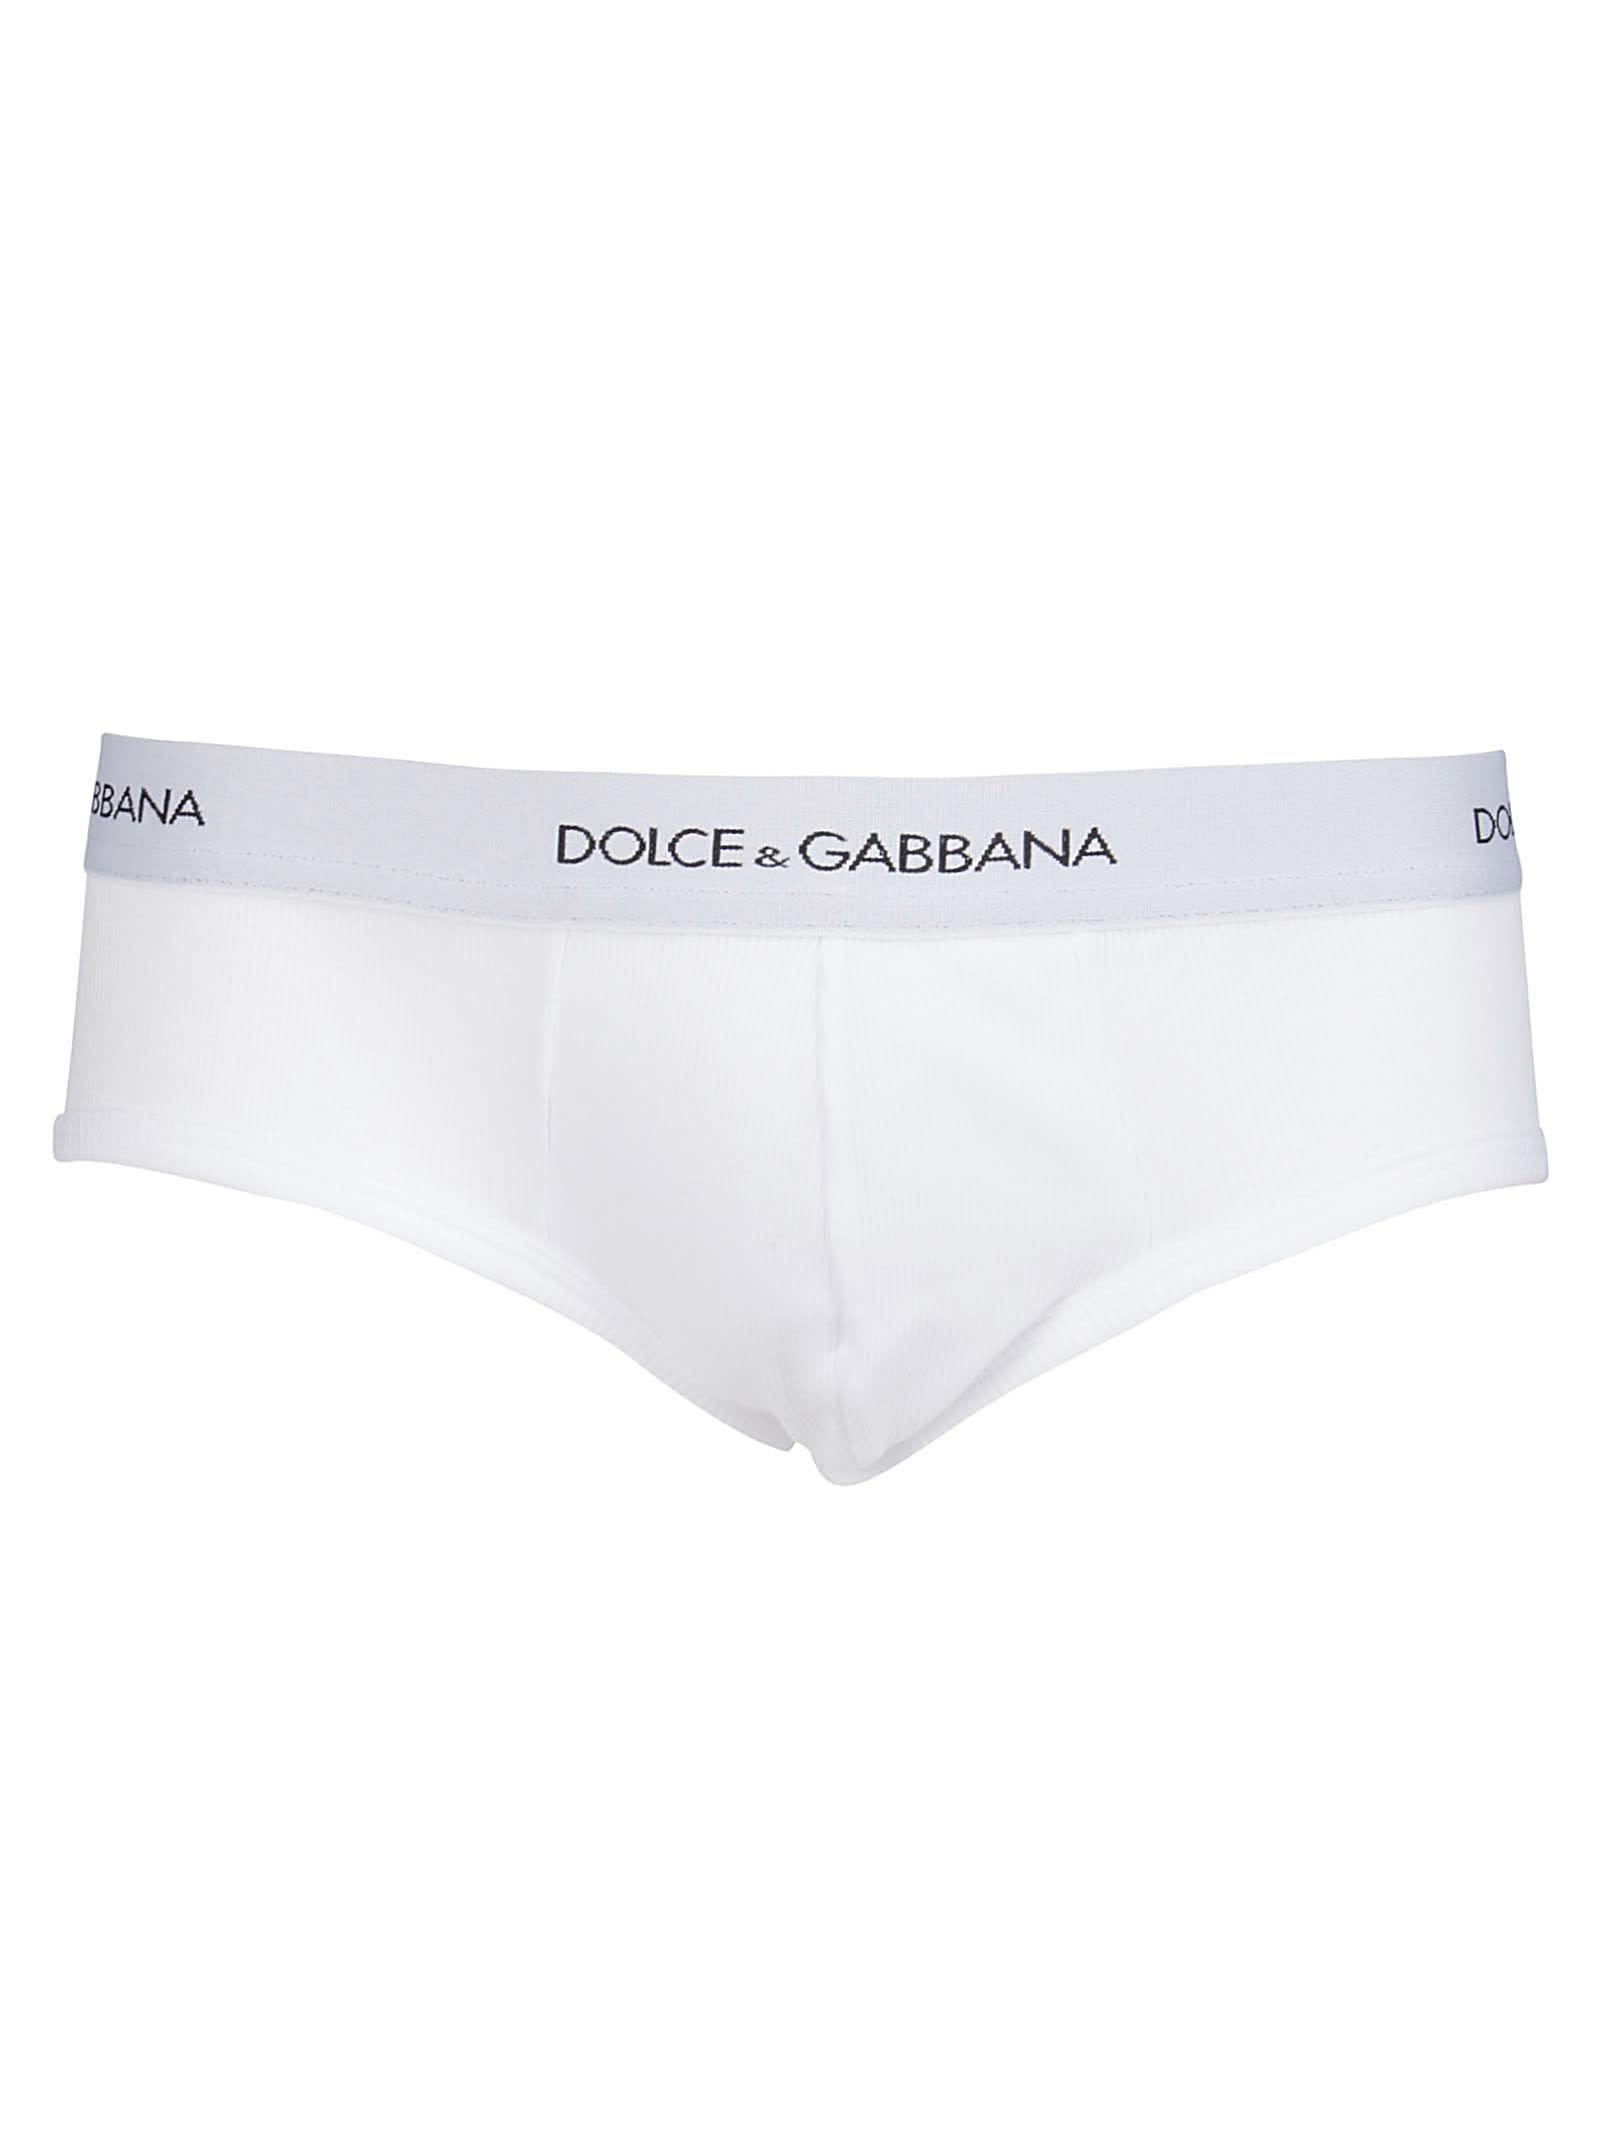 Dolce & Gabbana White Cotton Boxer Briefs